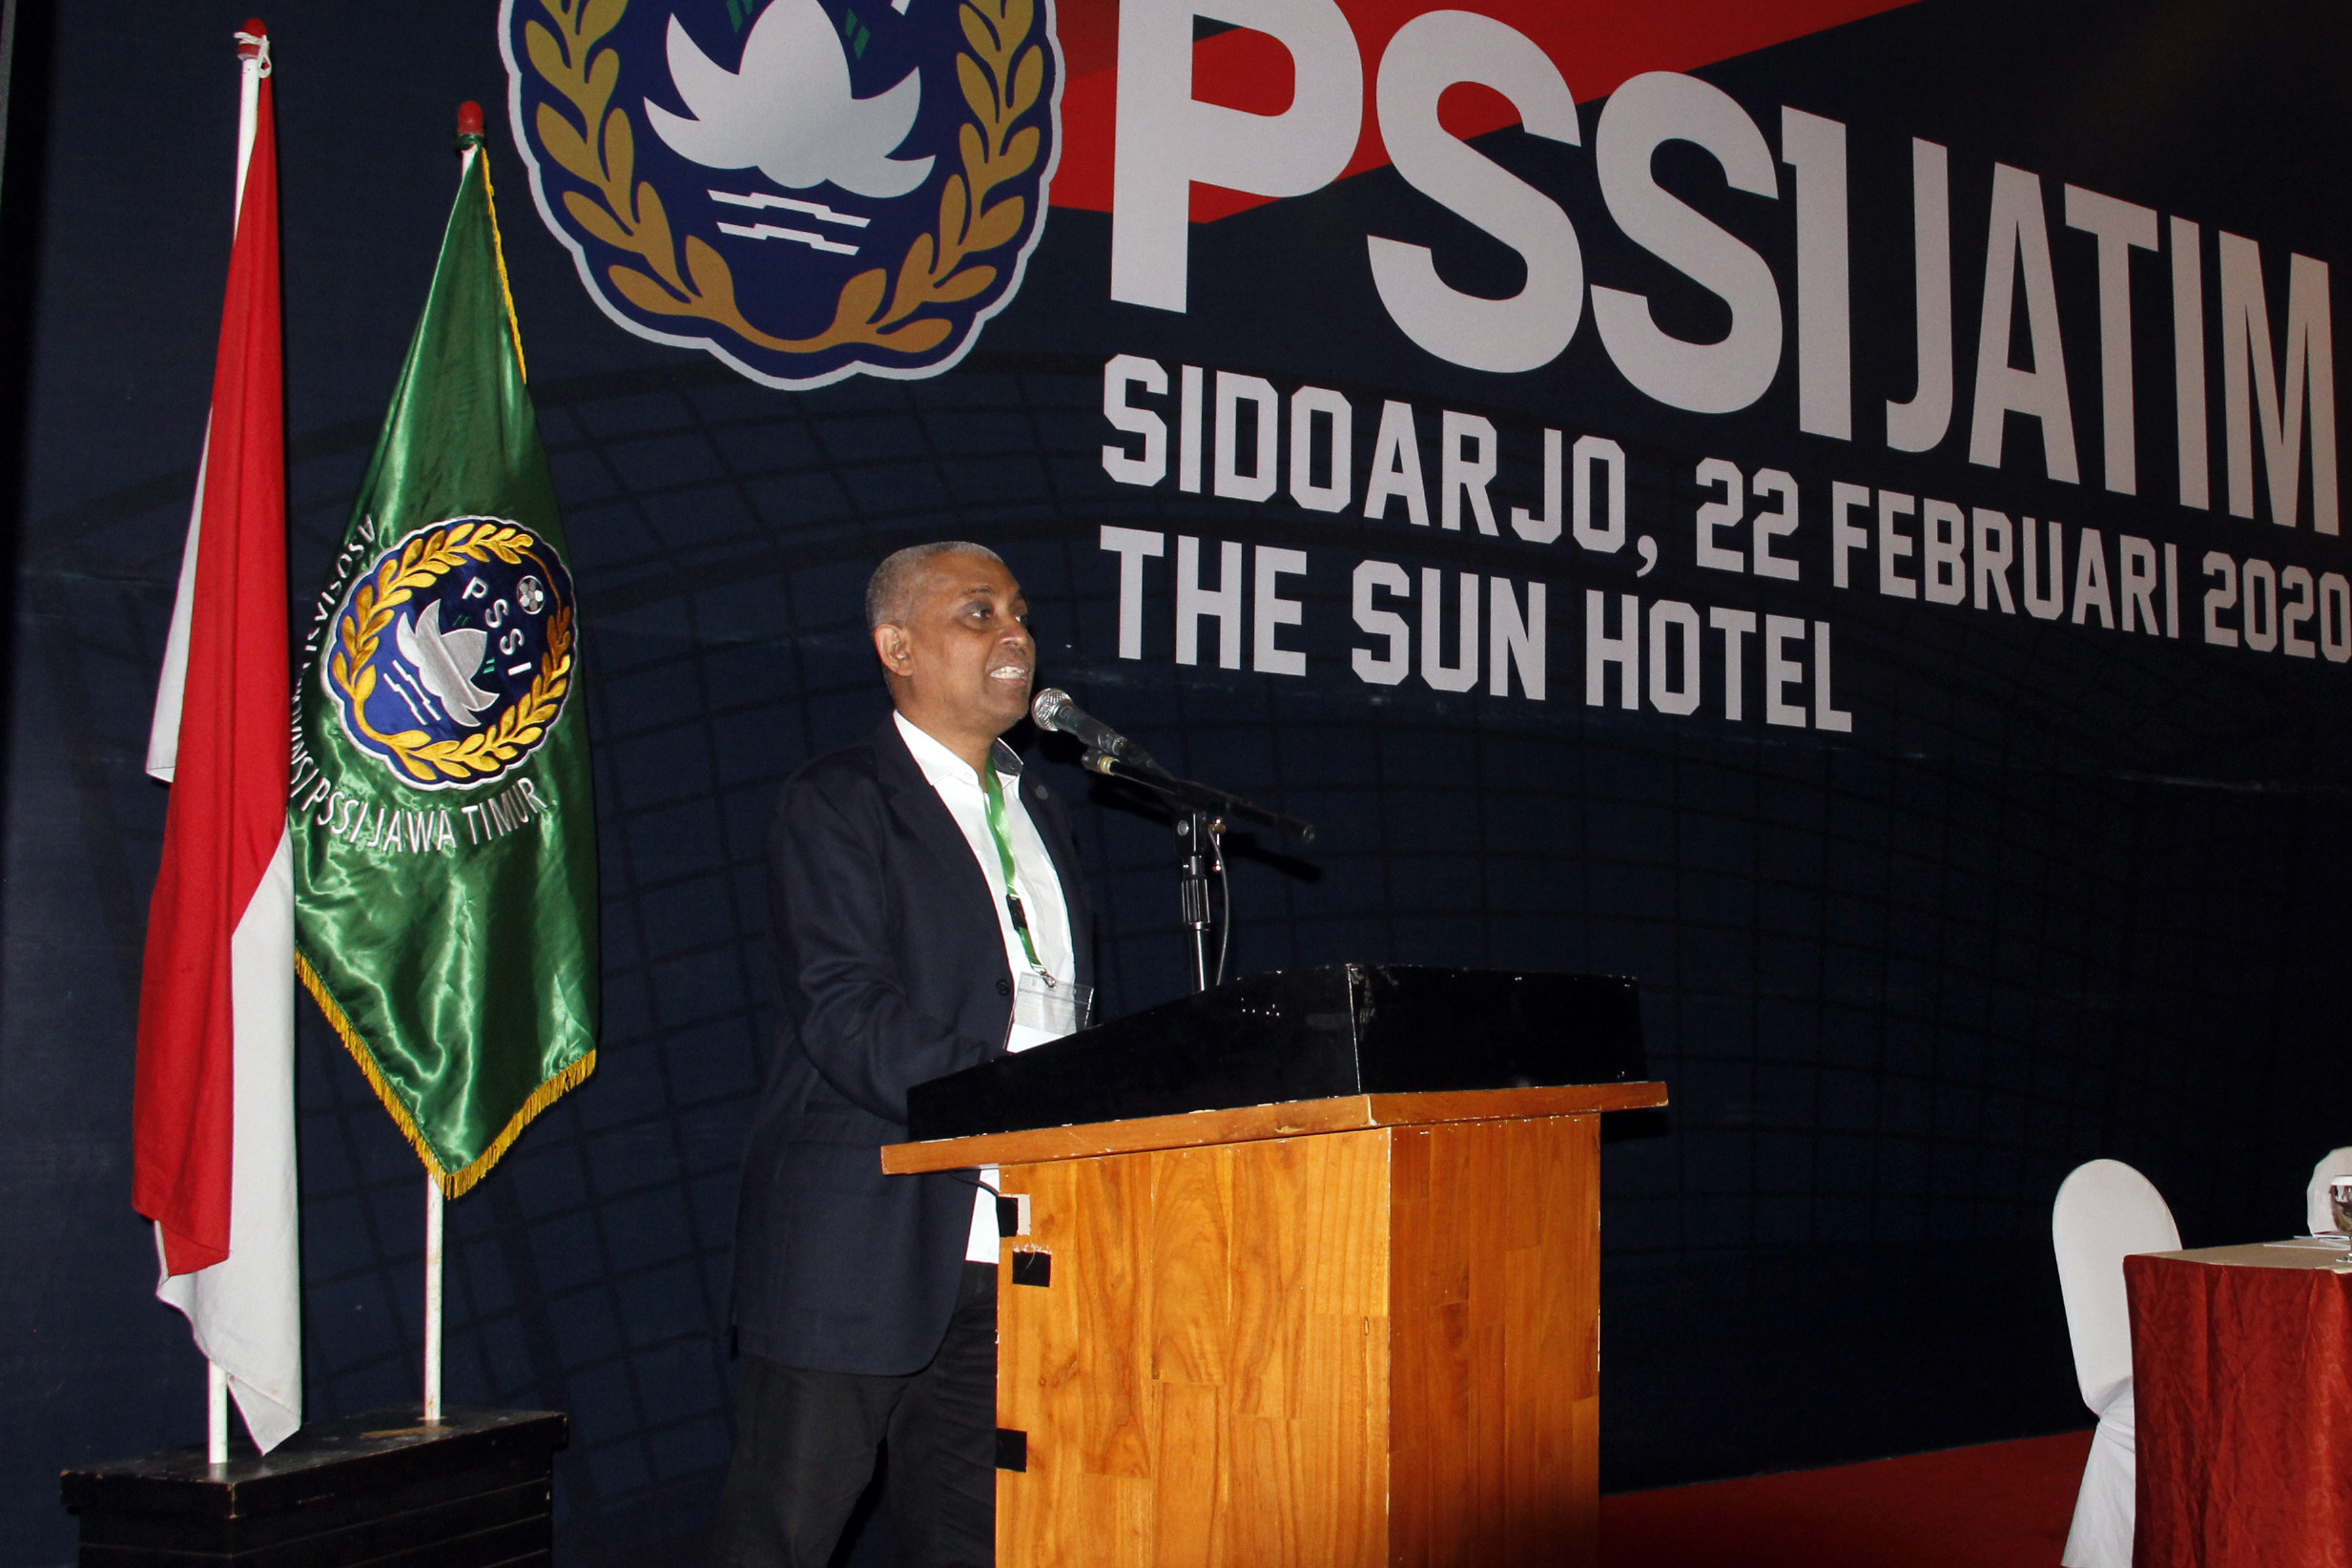 Ketua PSSI Jatim, Ahmad Riyadh UB, saat memberi sambutan dalam Kongres Tahunan PSSI Jawa Timur di The Sun Hotel, SIdoarjo, Sabtu 22 Februari 2020. (Foto: Fariz Yarbo/Ngopibareng.id)